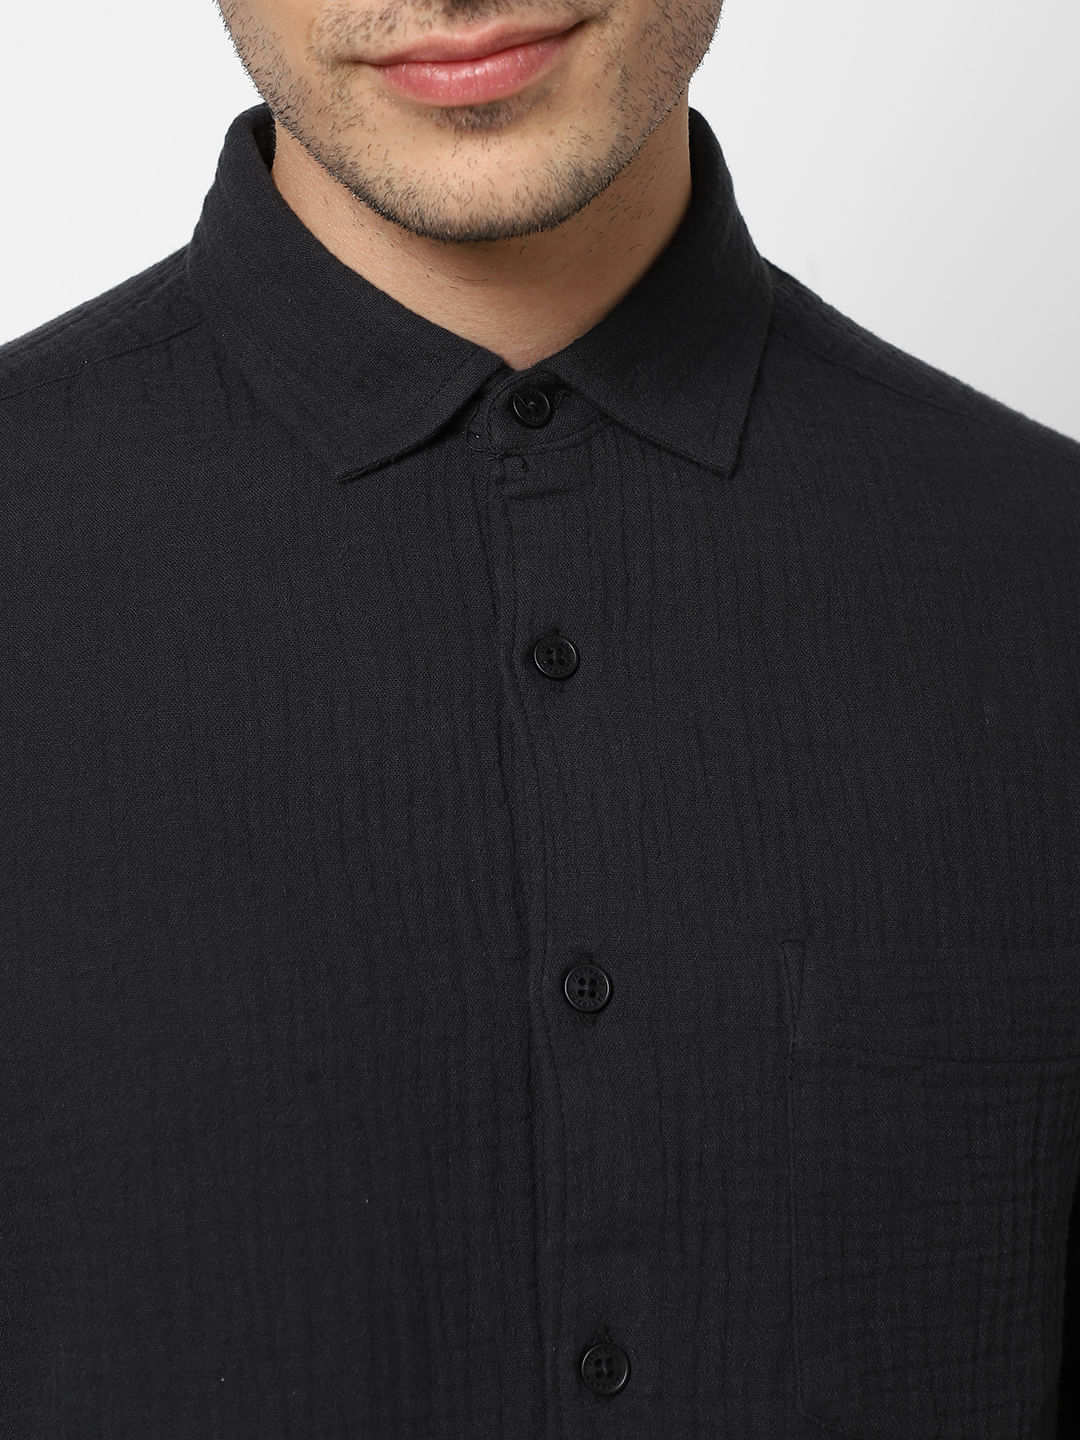 Black Crepe Shirt